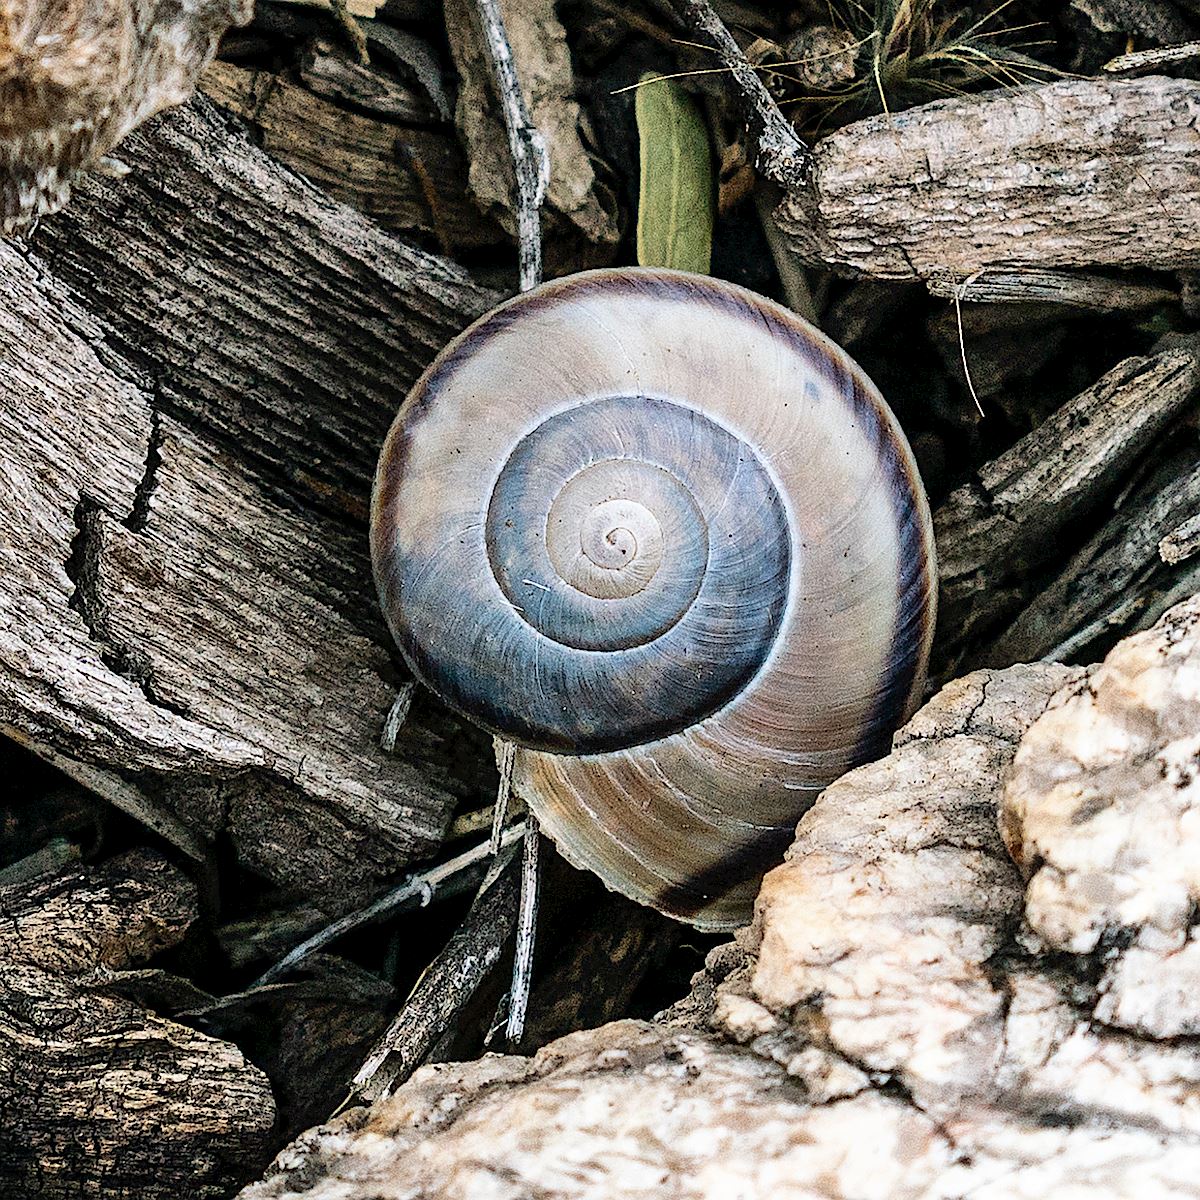 Snail shell near Agua Caliente Canyon. January 2019.